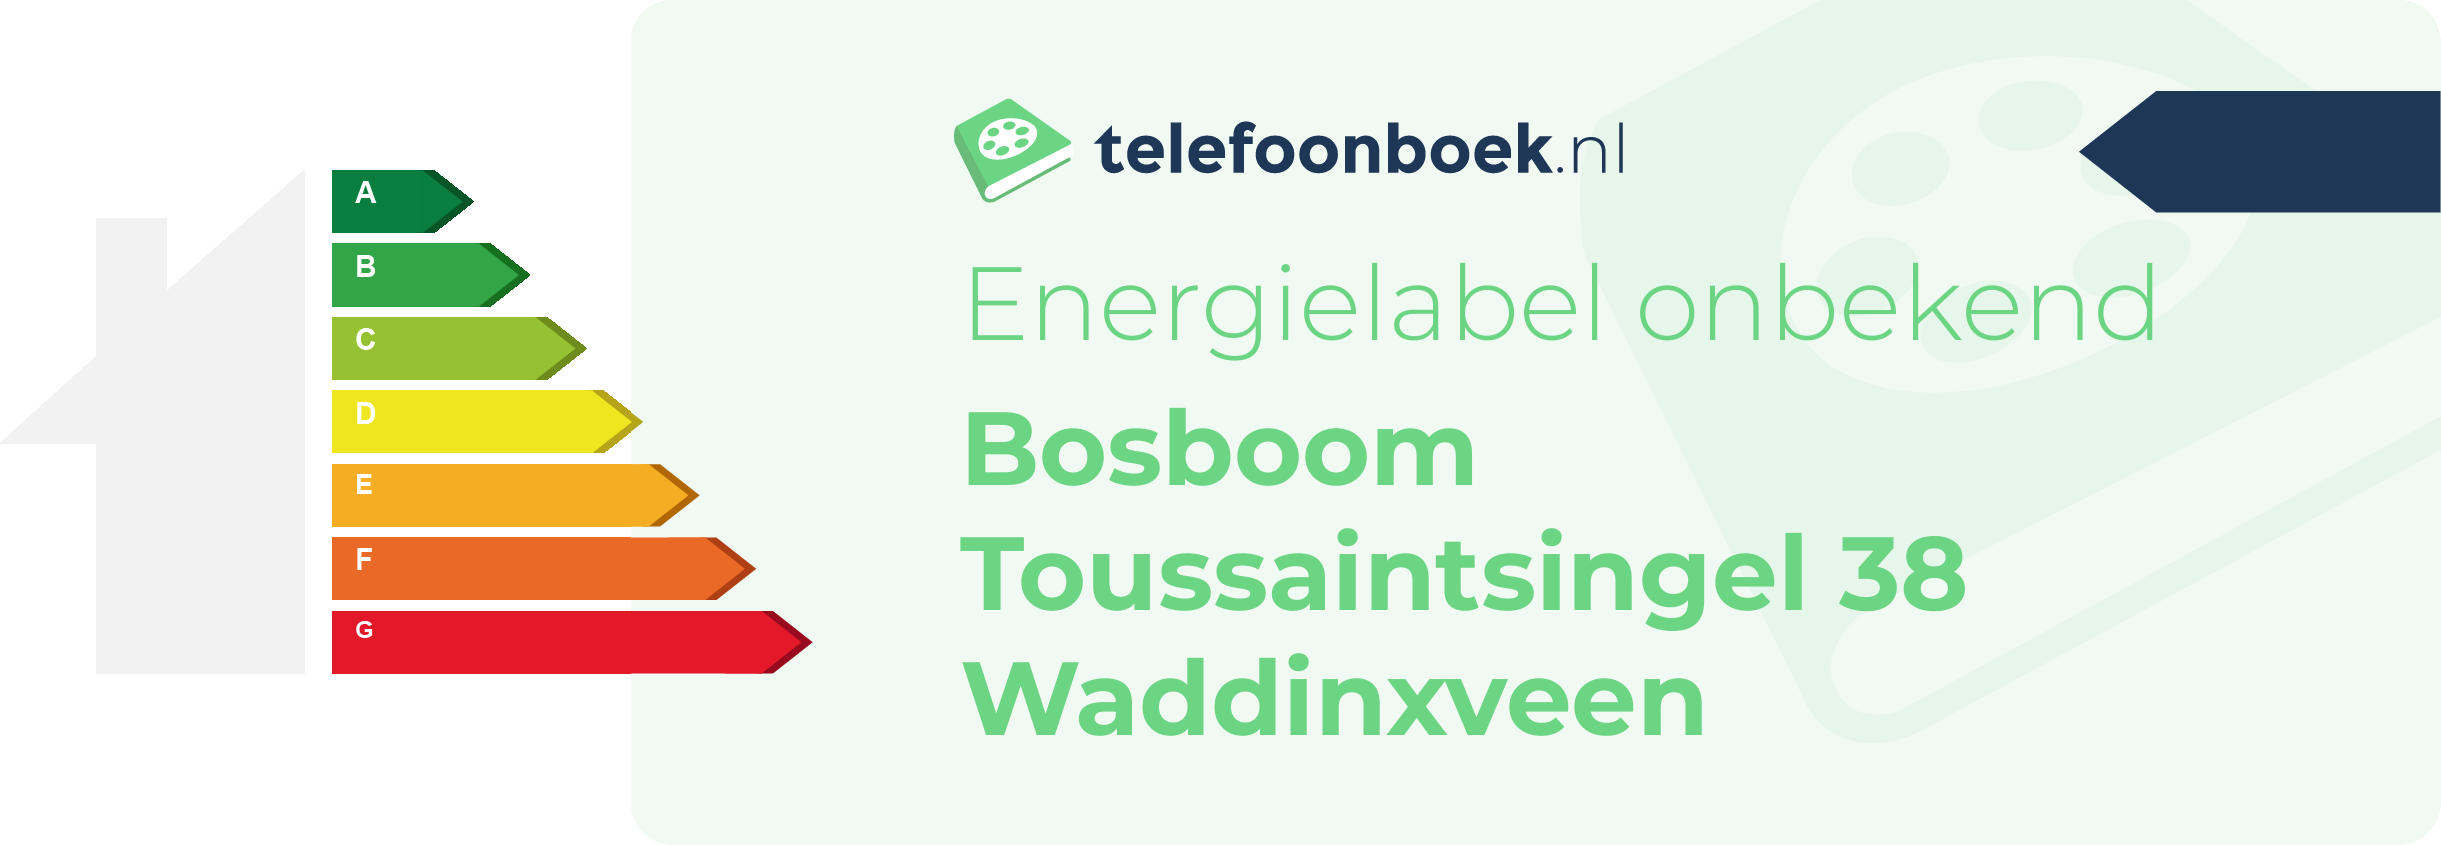 Energielabel Bosboom Toussaintsingel 38 Waddinxveen